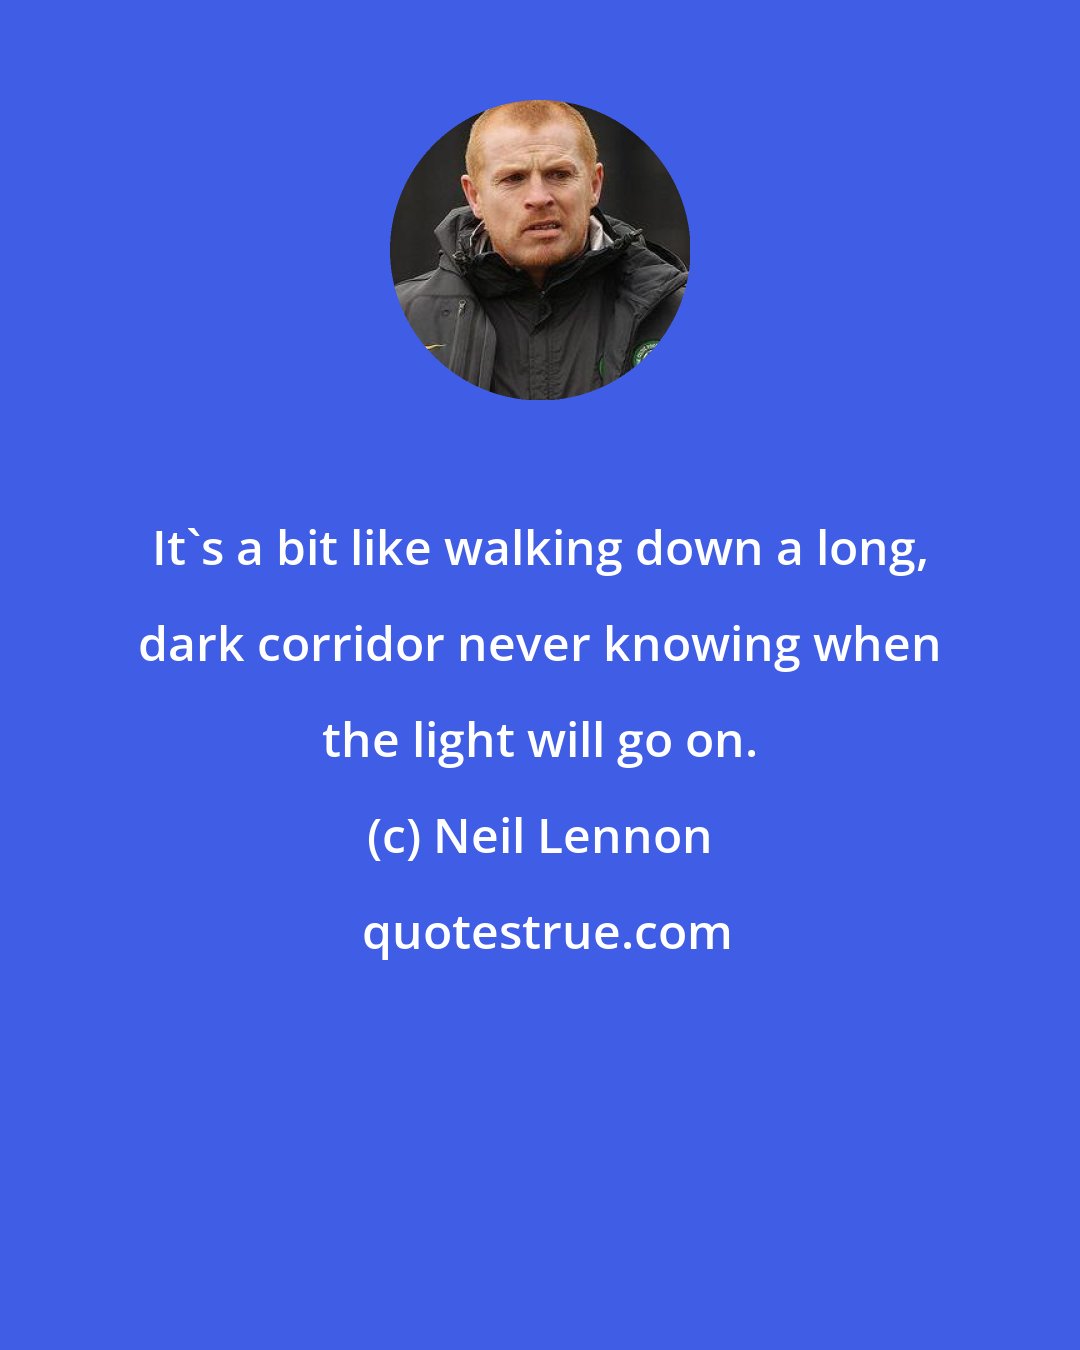 Neil Lennon: It's a bit like walking down a long, dark corridor never knowing when the light will go on.